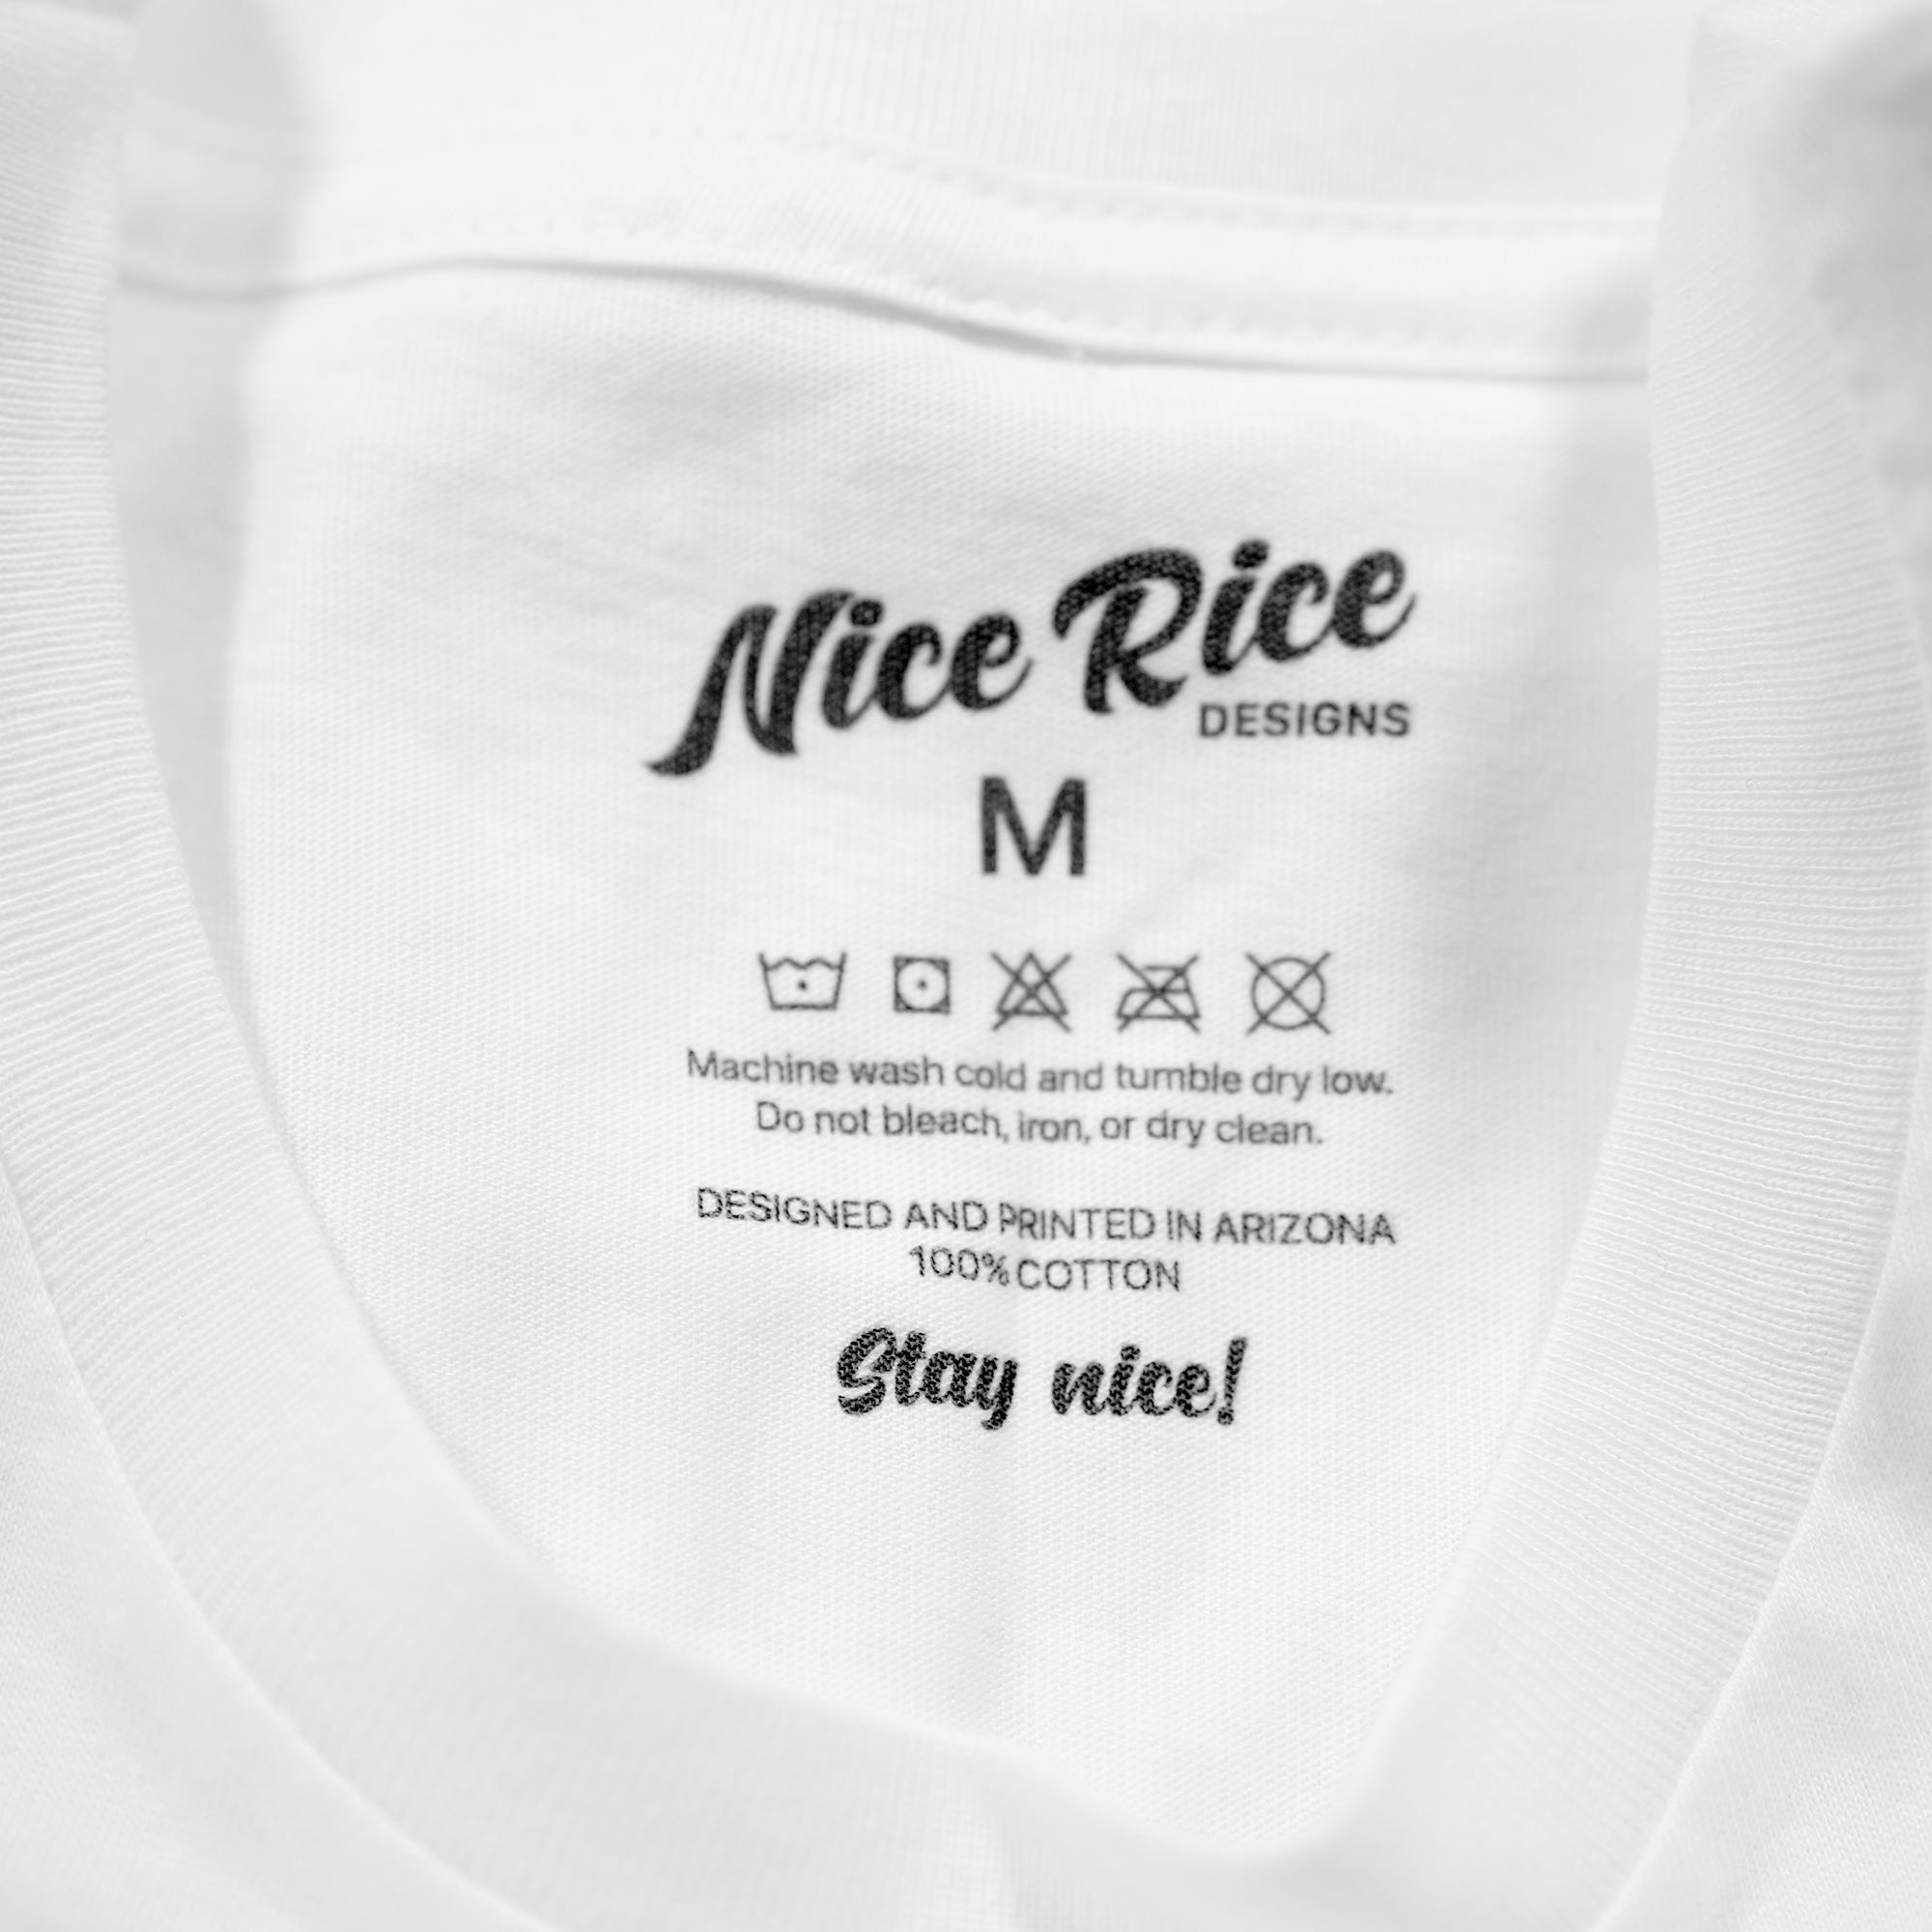 Boyz 4 Meow Shirt by Nice Rice Designs